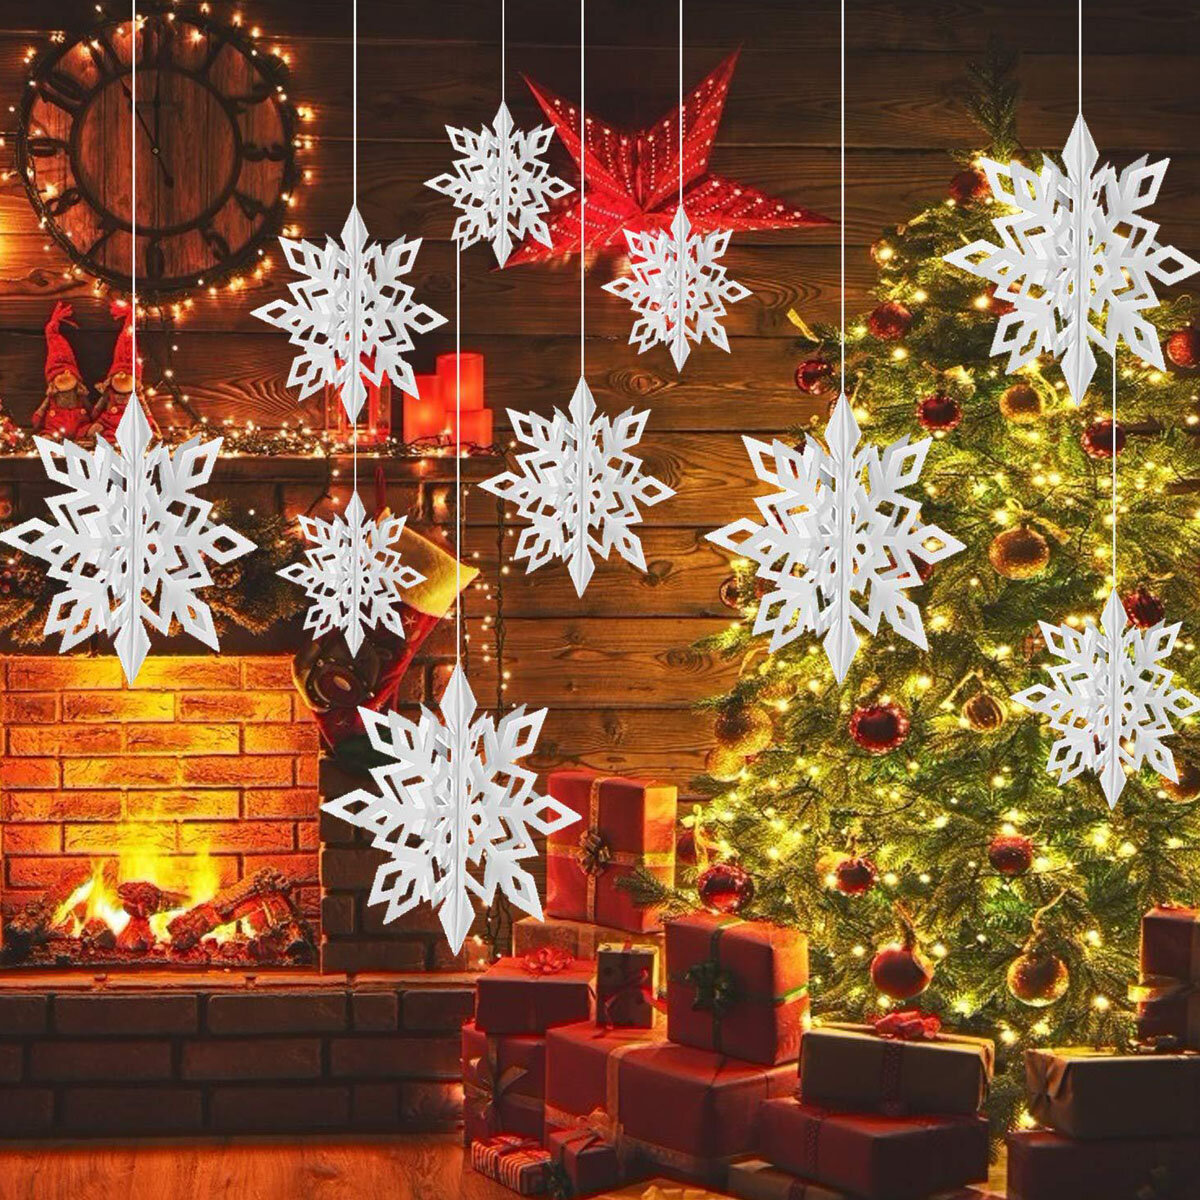 Snowflakes Hanging Decorations Christmas Party Pendant Xmas Ornaments Home Décor 